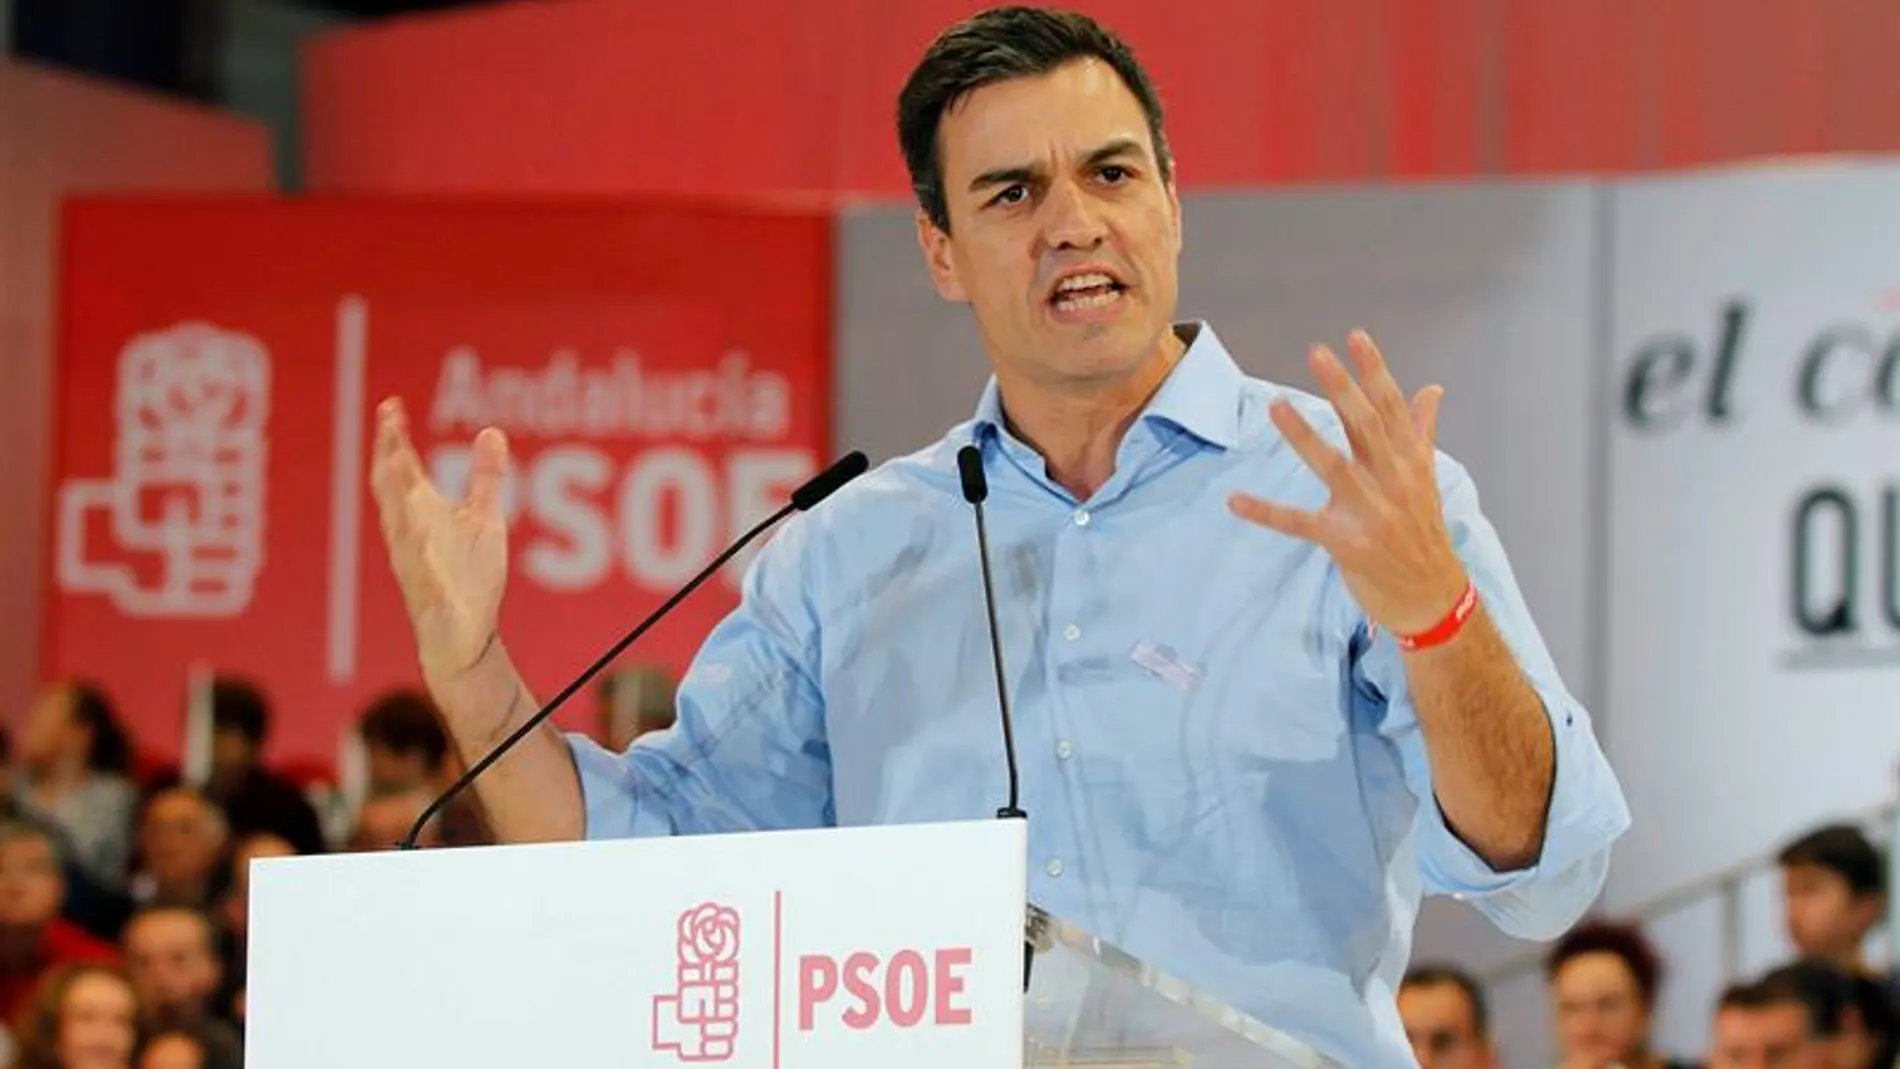 Pedro Sánchez, candidato del PSOE a la Moncloa